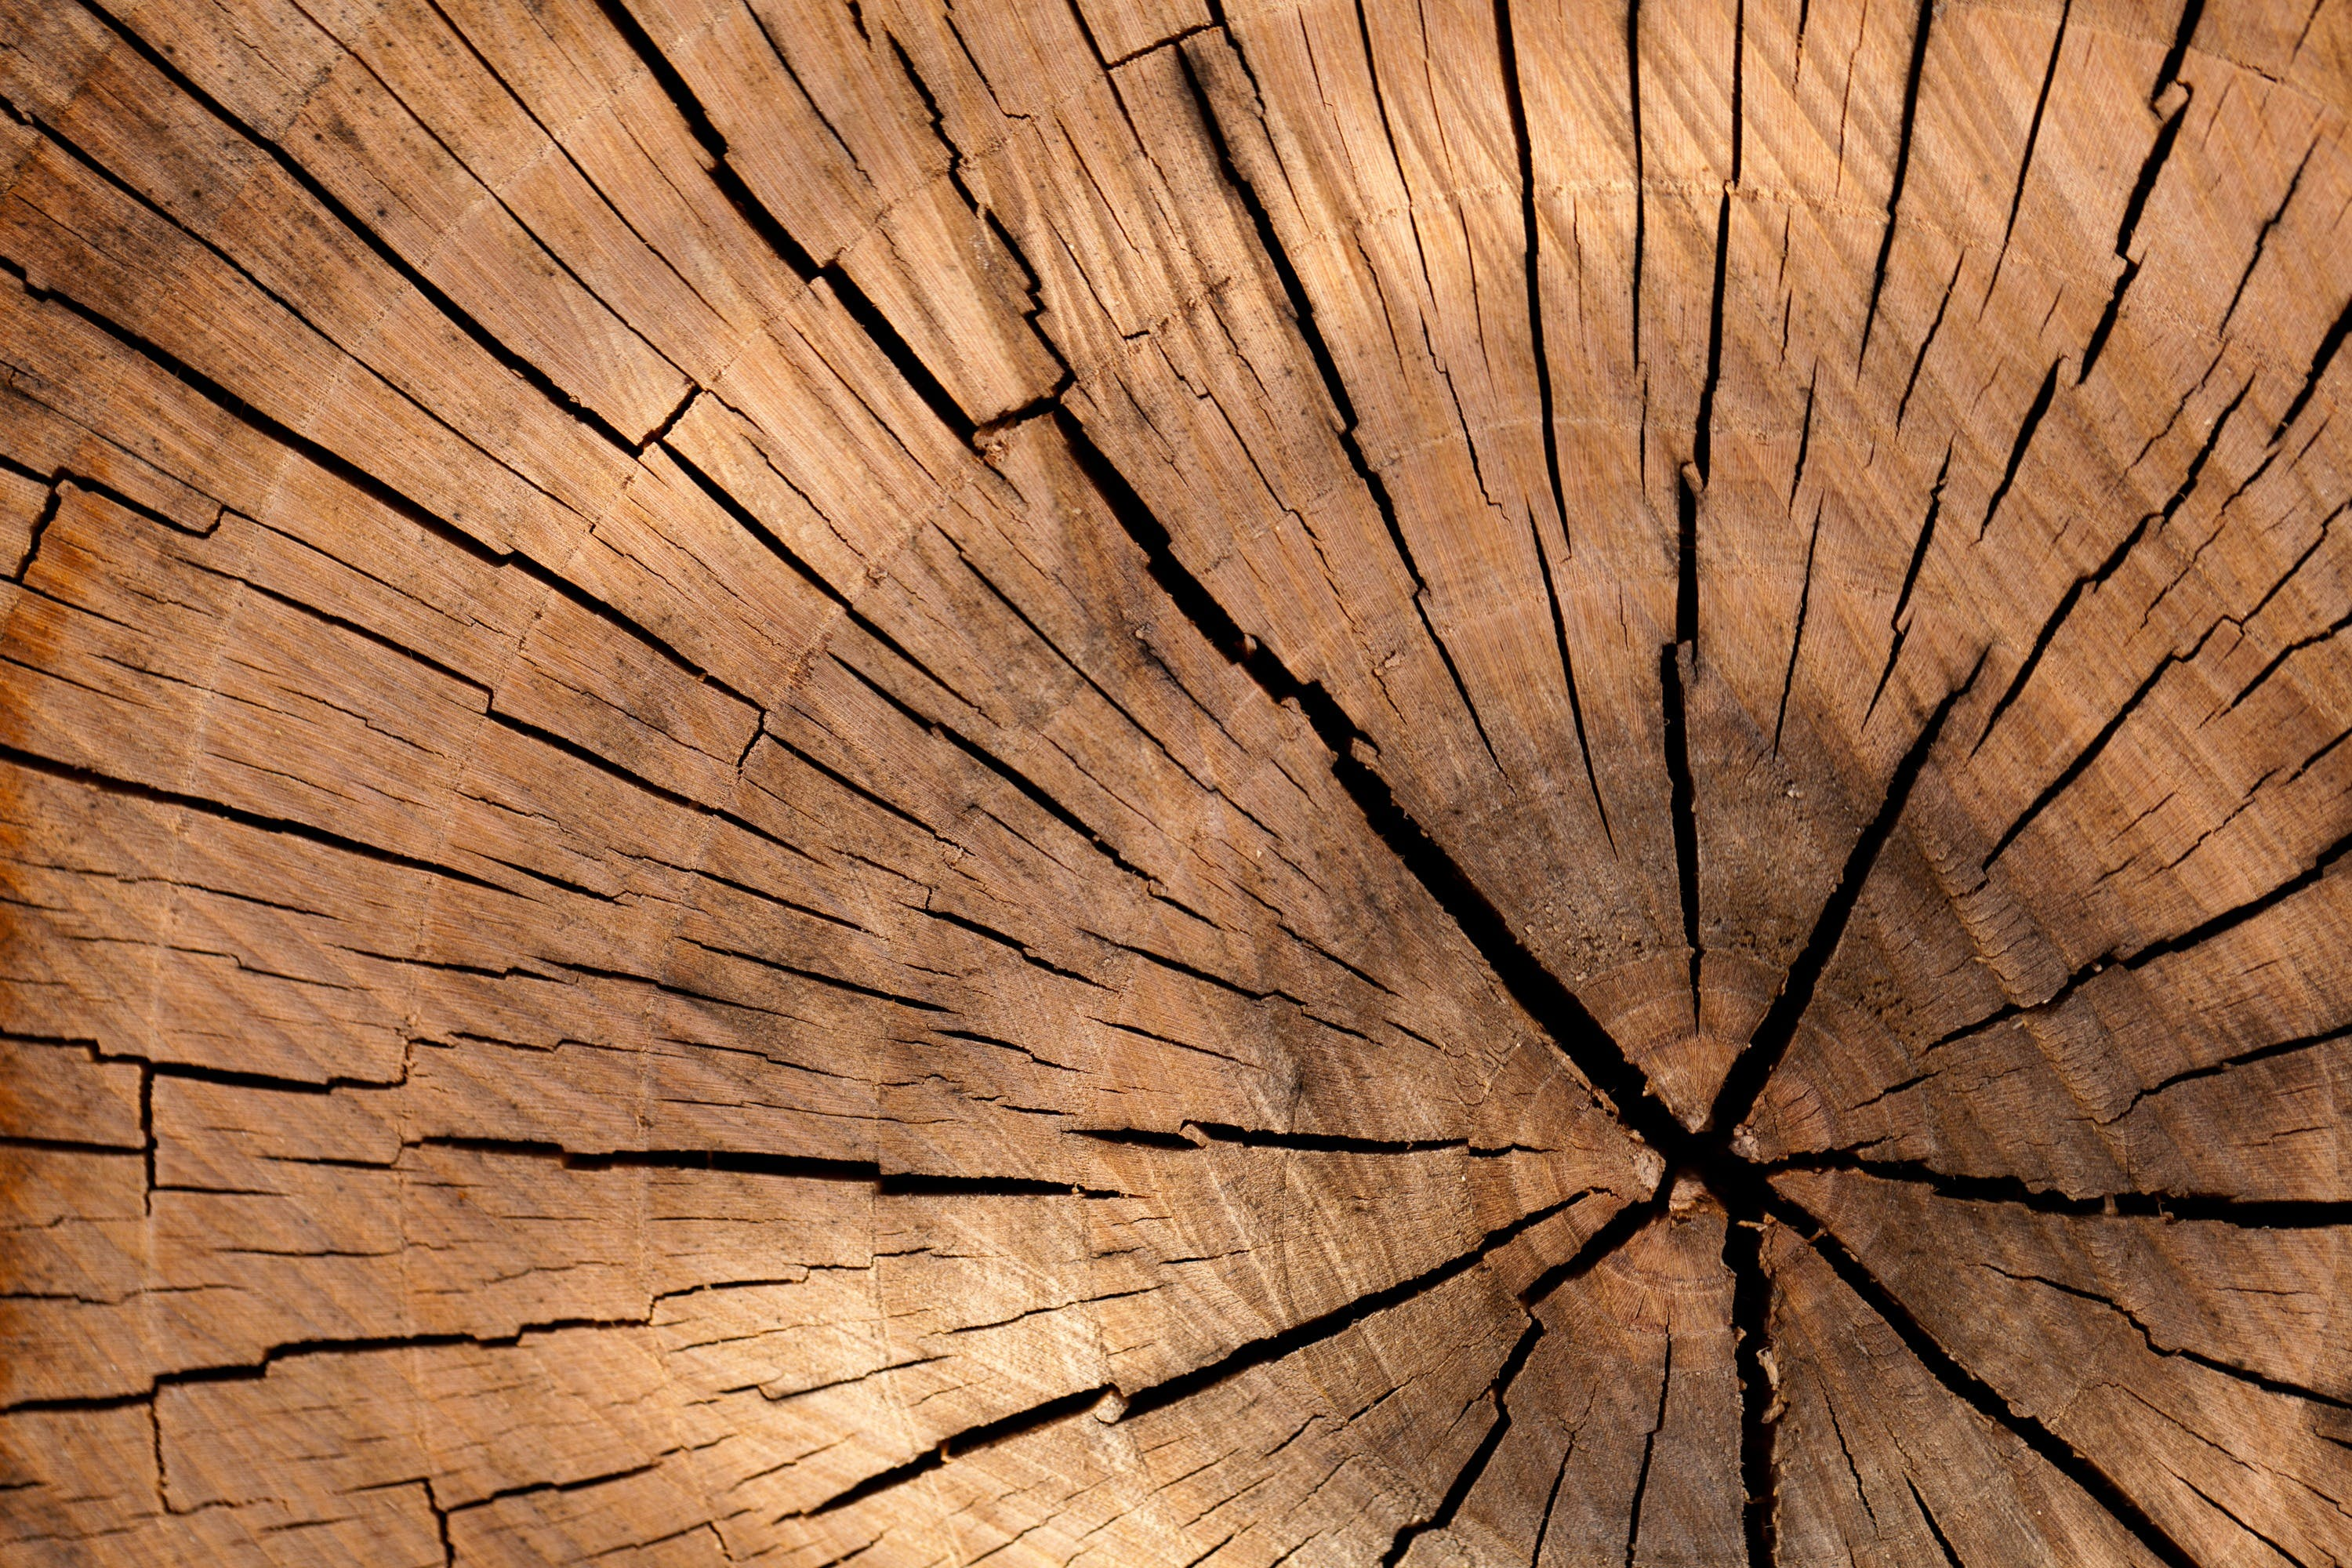 Close-up of oak wood grain